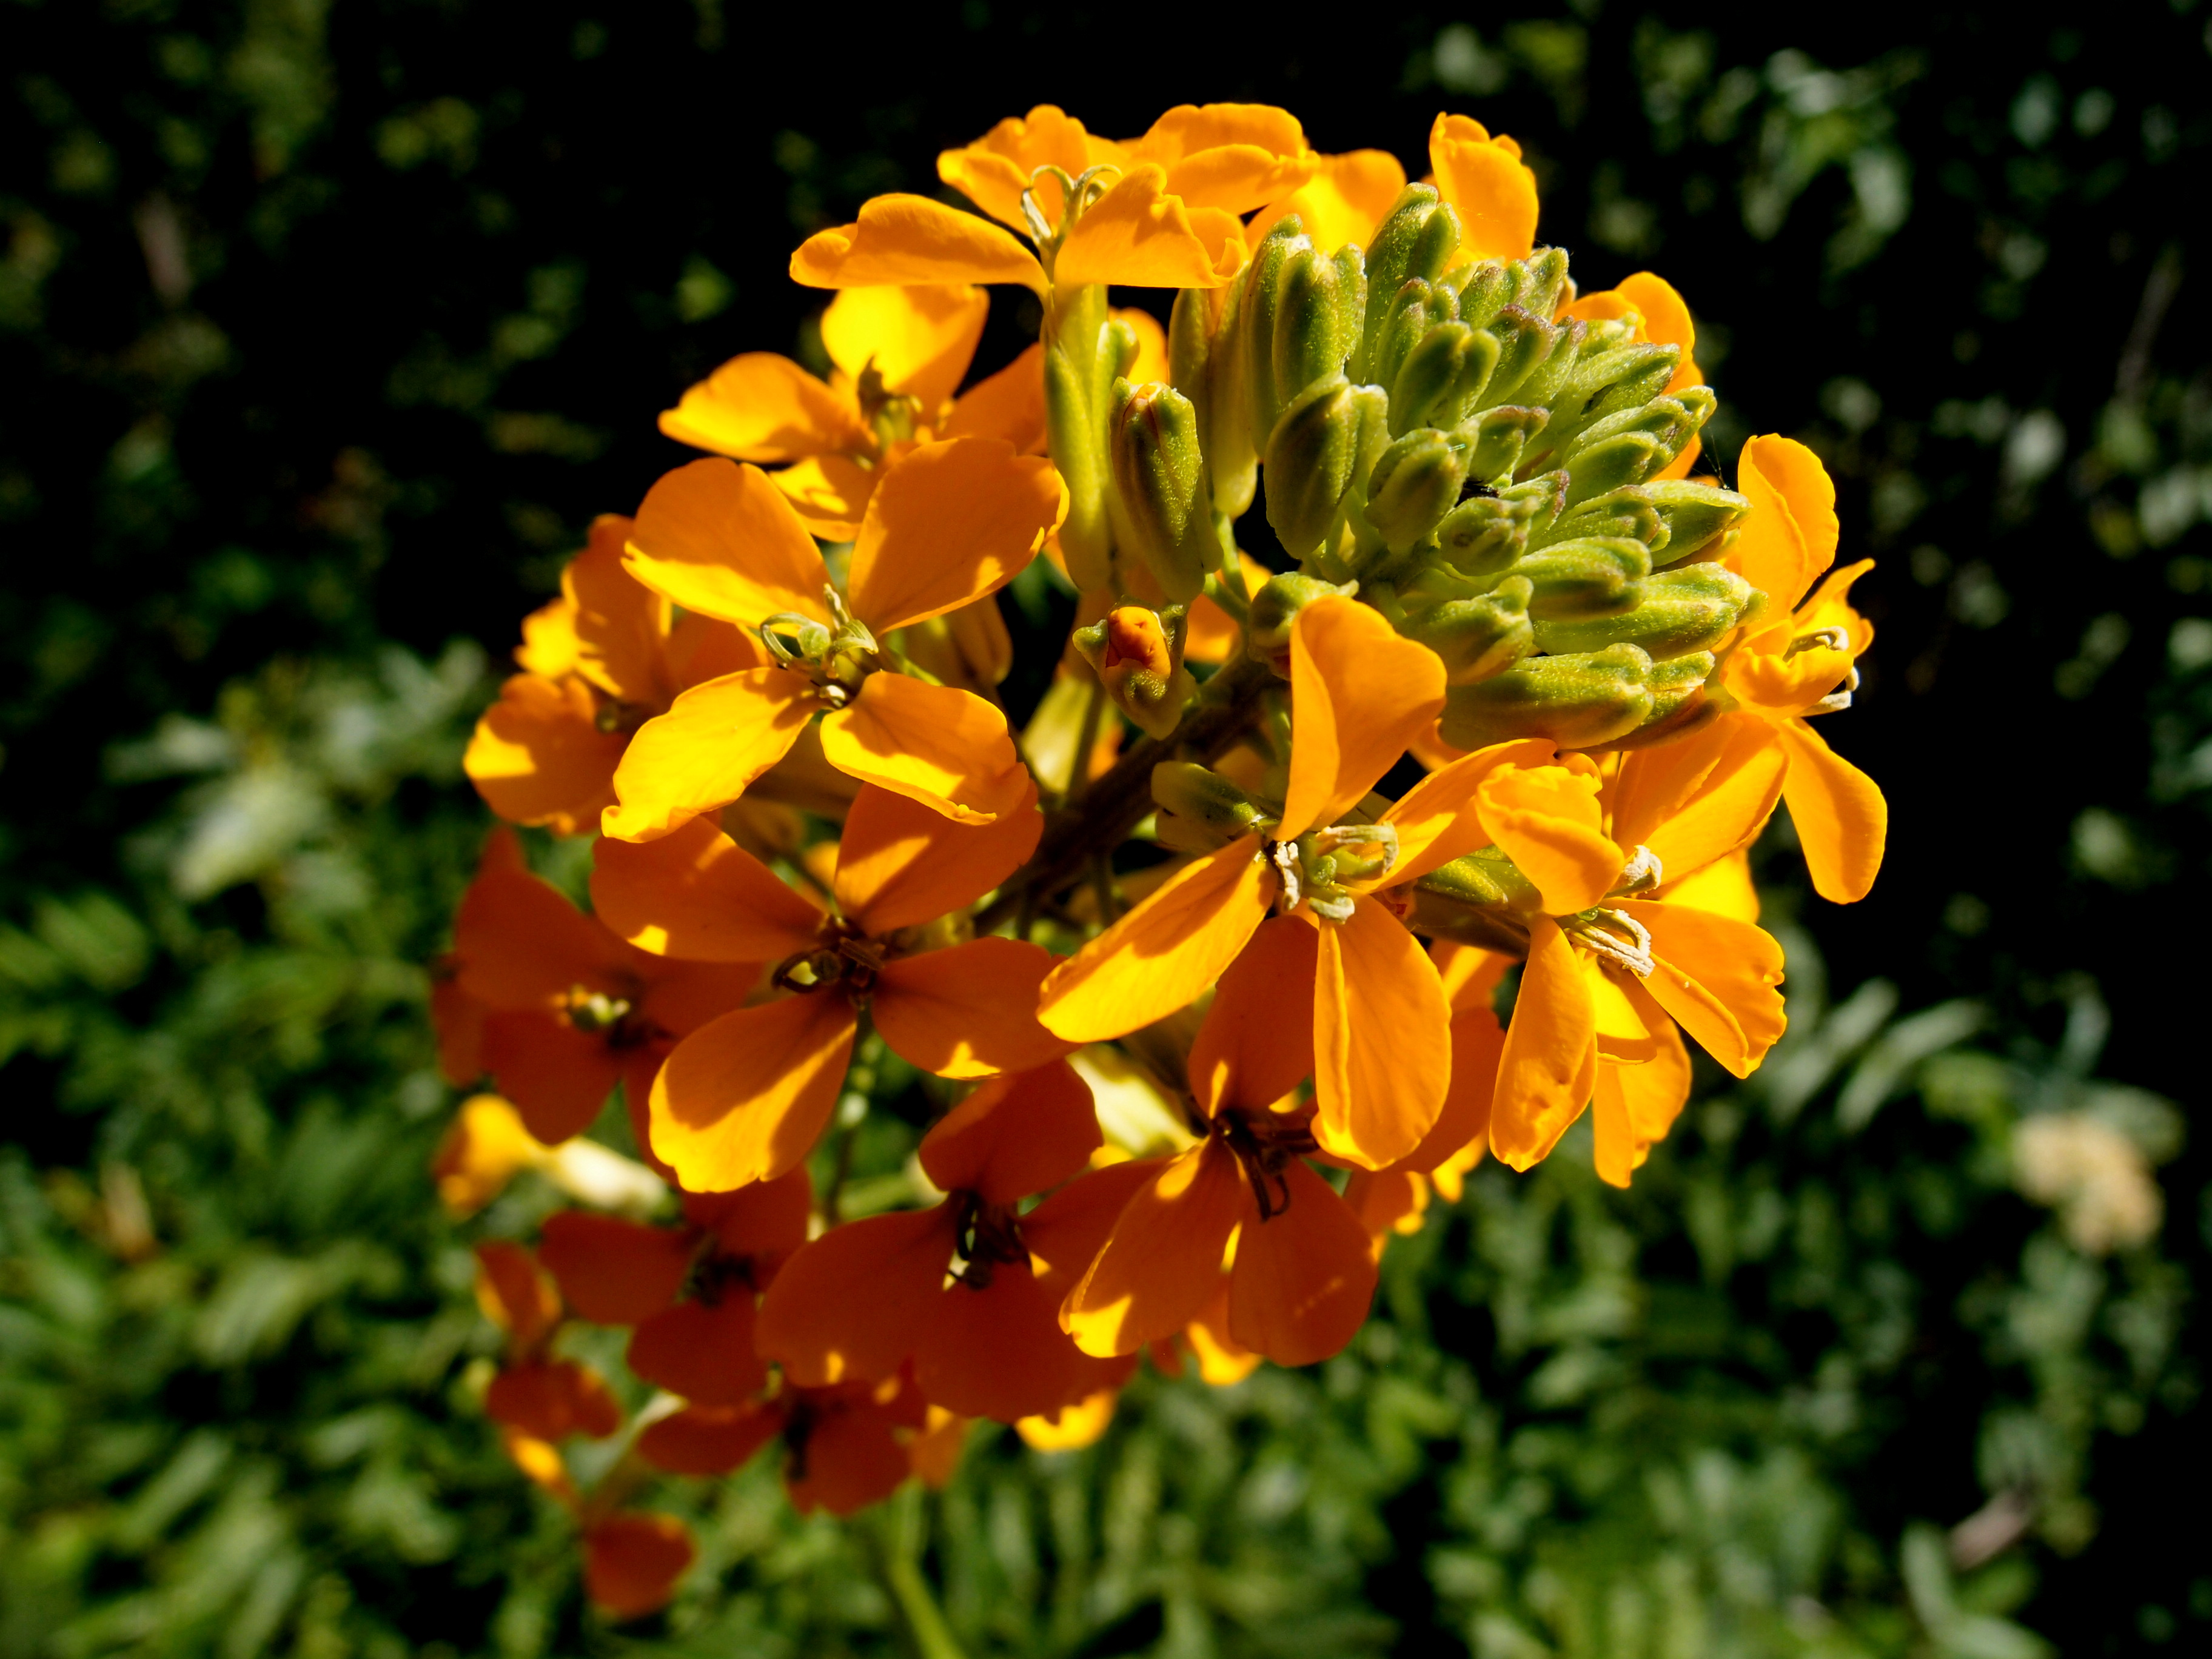 A bunch of orange flowers on a stem.